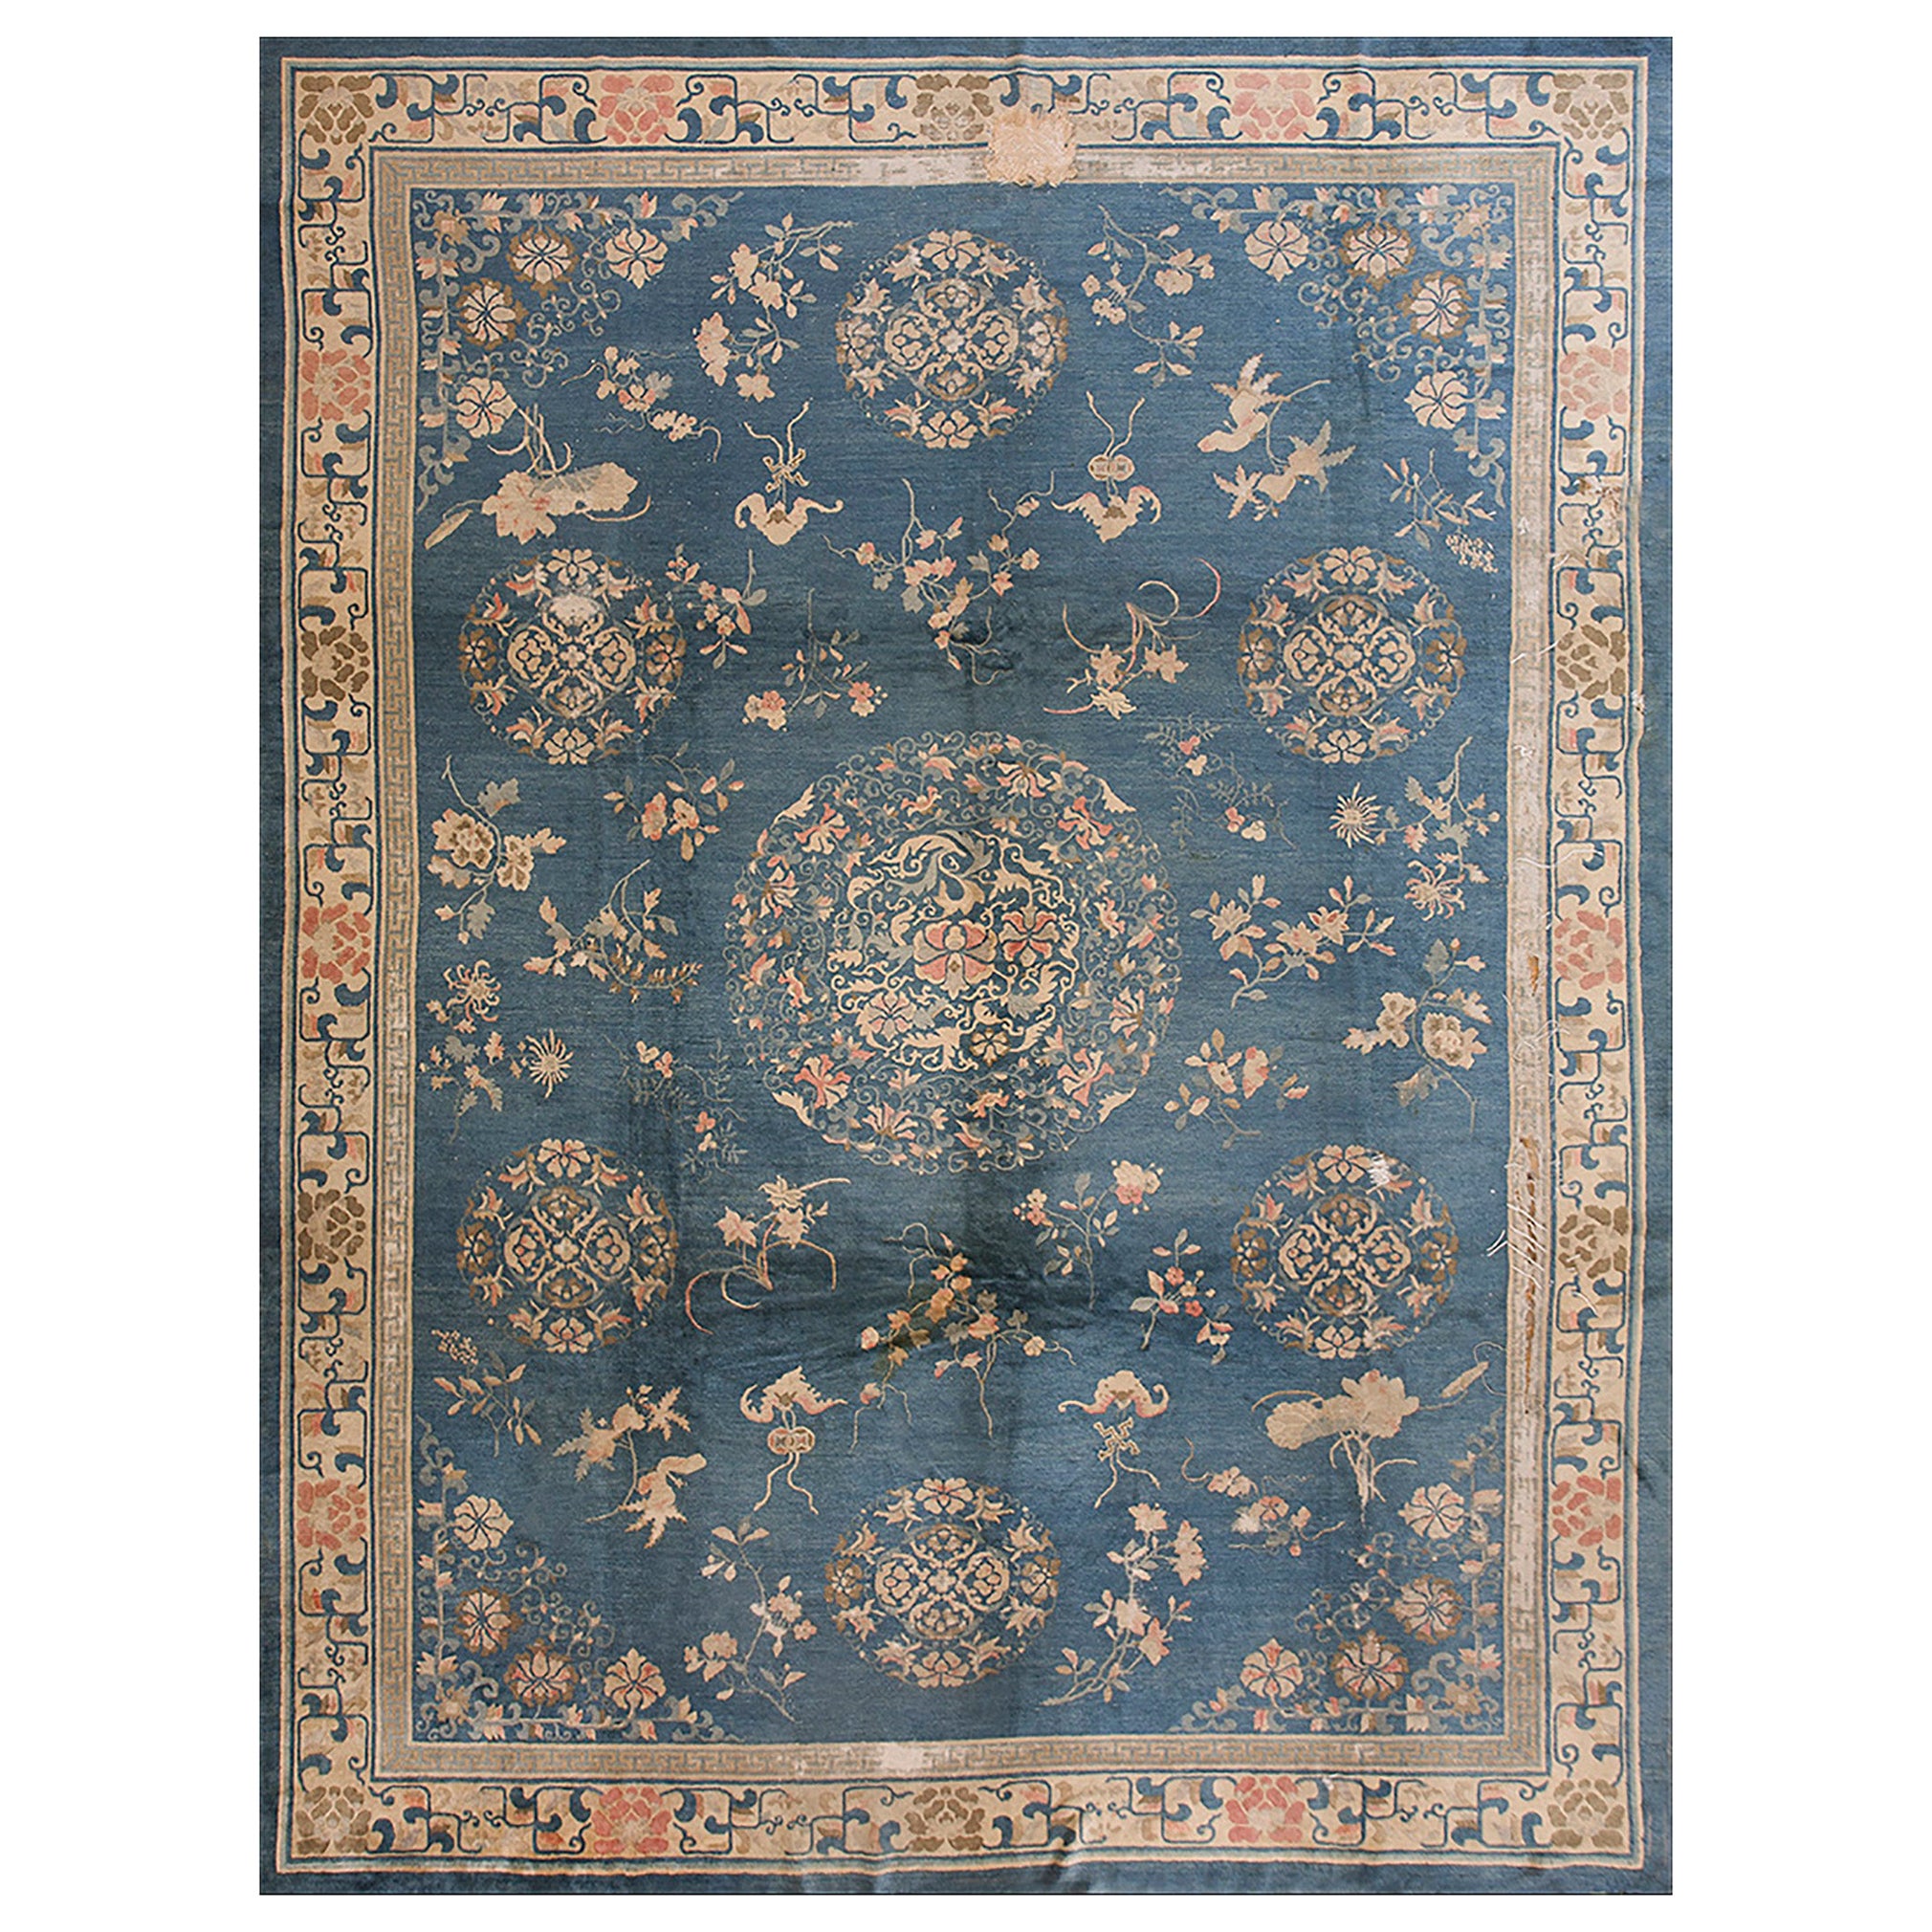 19th Century Chinese Peking Carpet ( 9'10" x 13'2" - 300 x 400 )